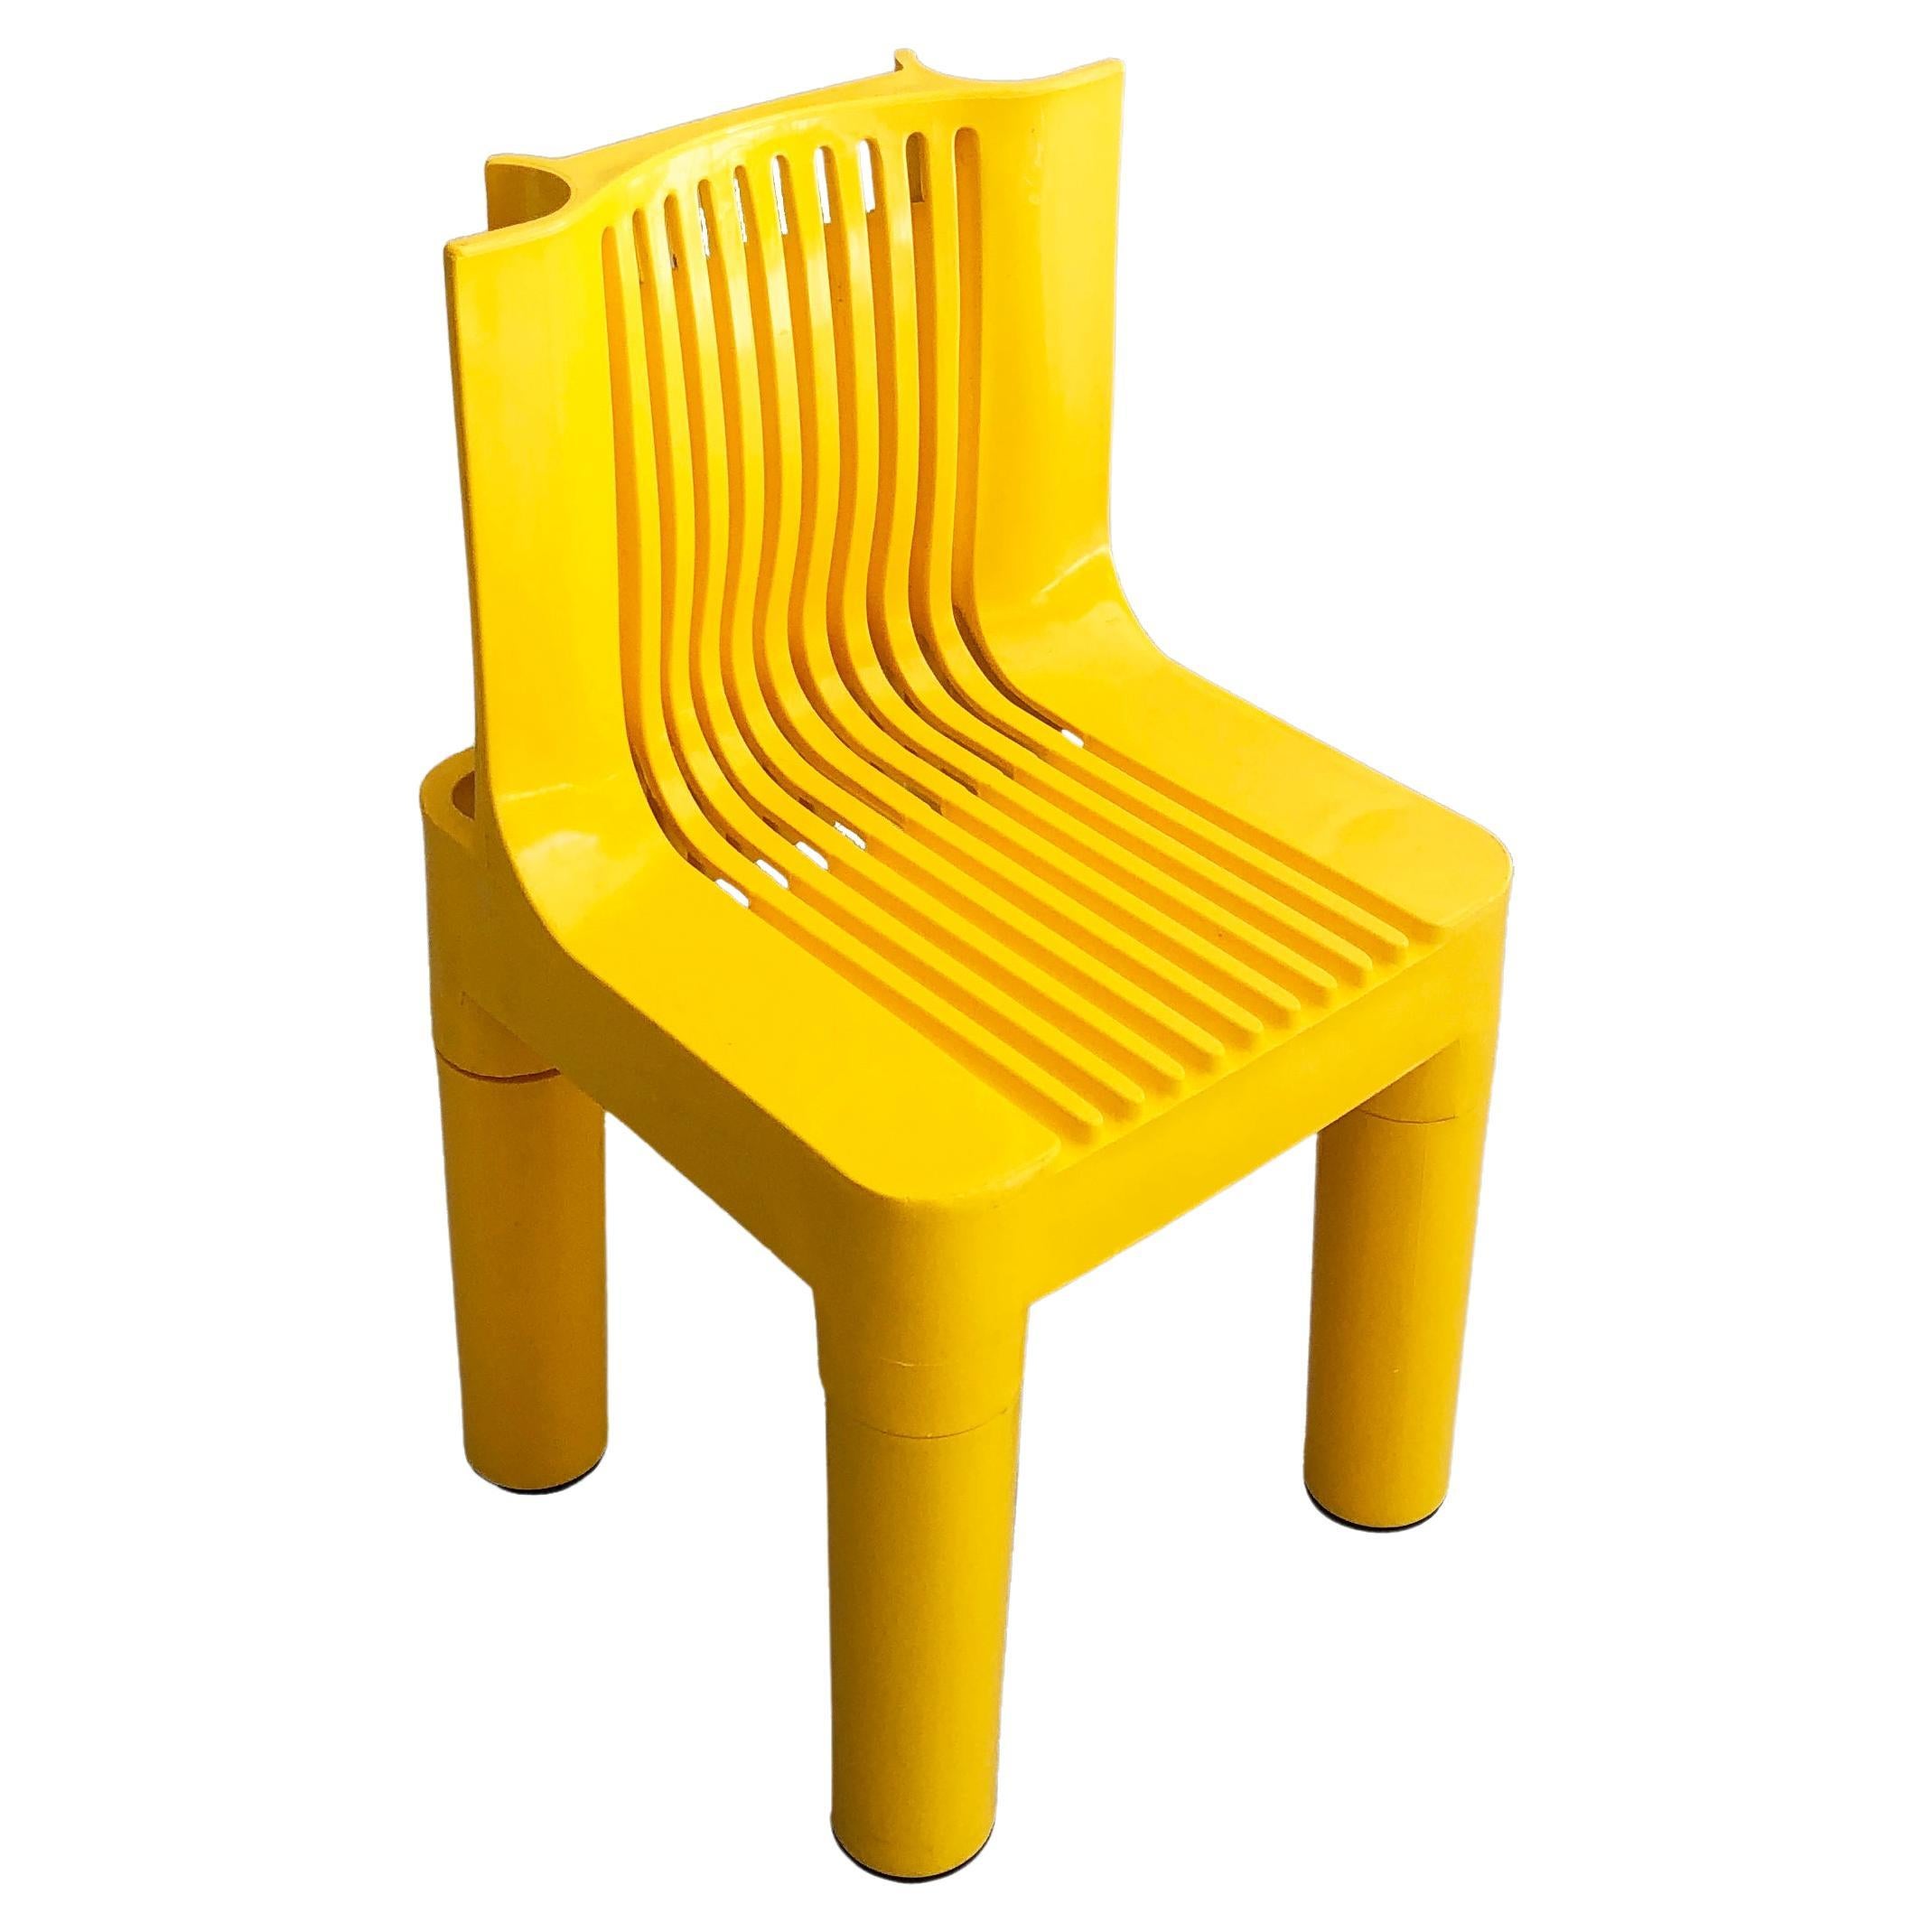 Child chair K 1340 (later 4999) Kartell Marco Zanuso / Richard Sapper 1964 For Sale